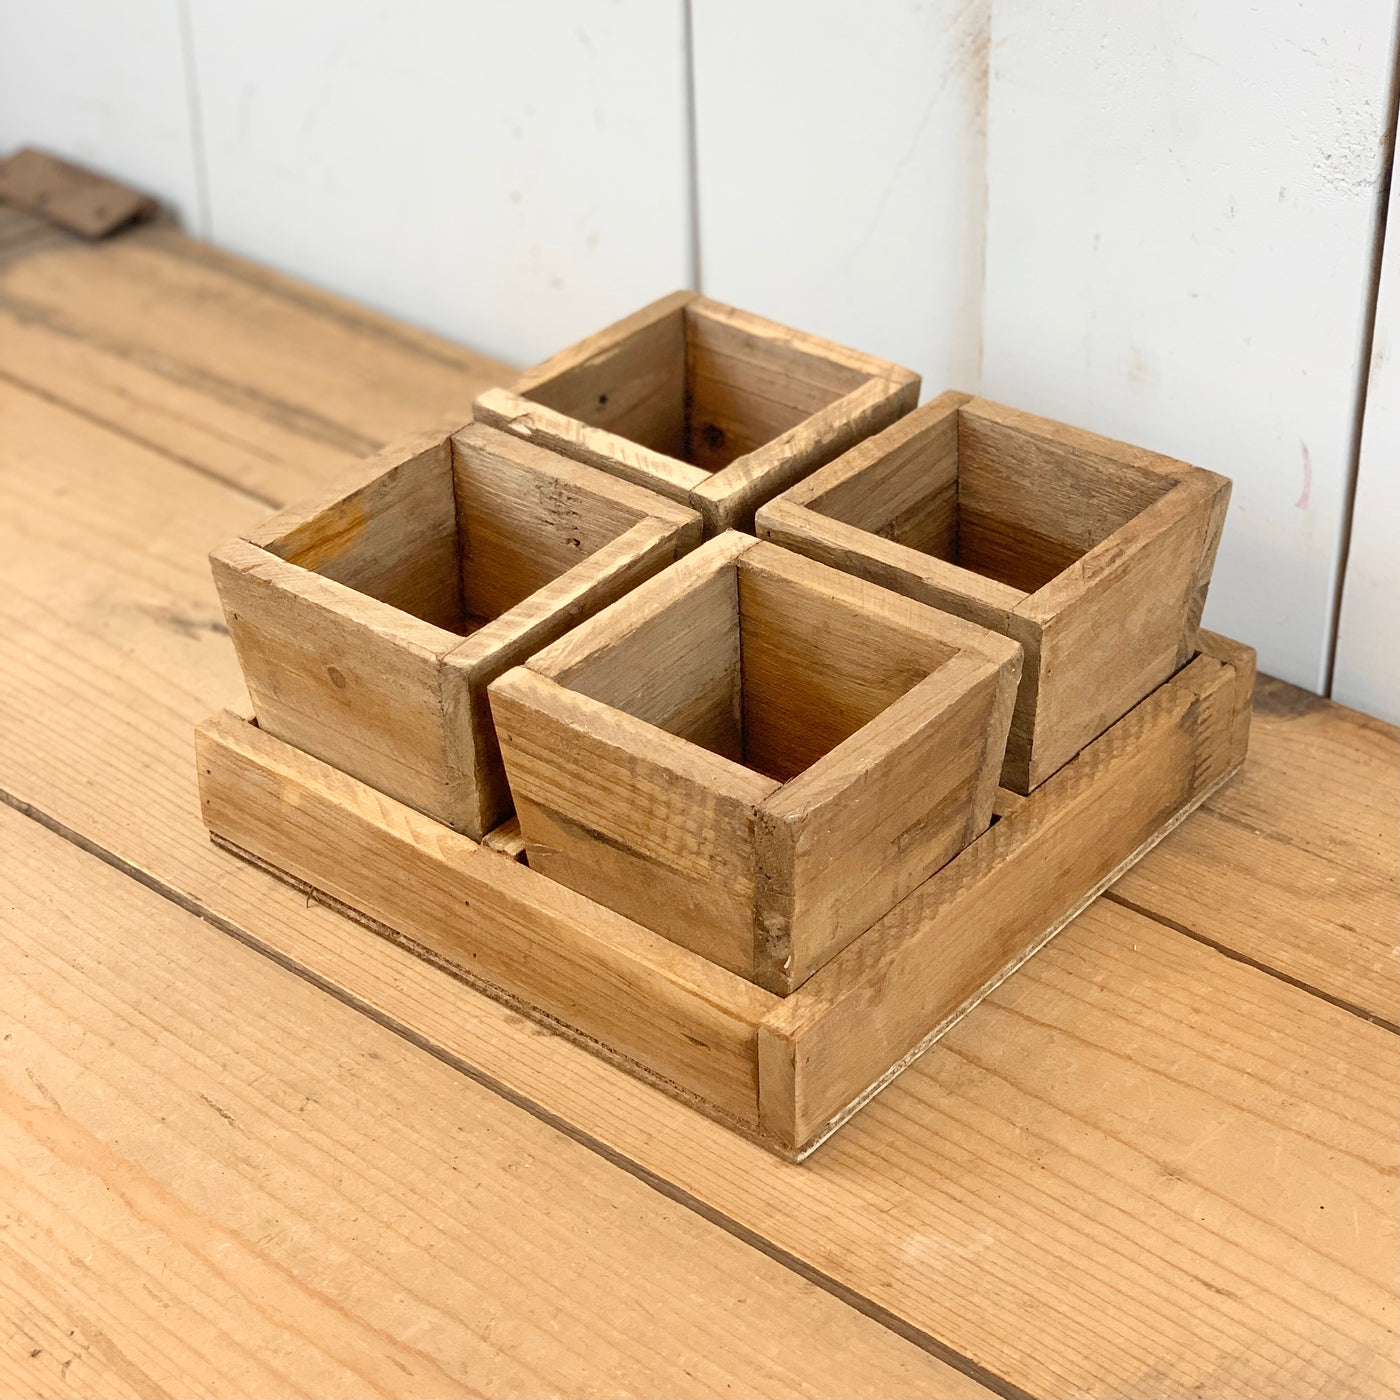 Wooden Planters - 4 Boxes